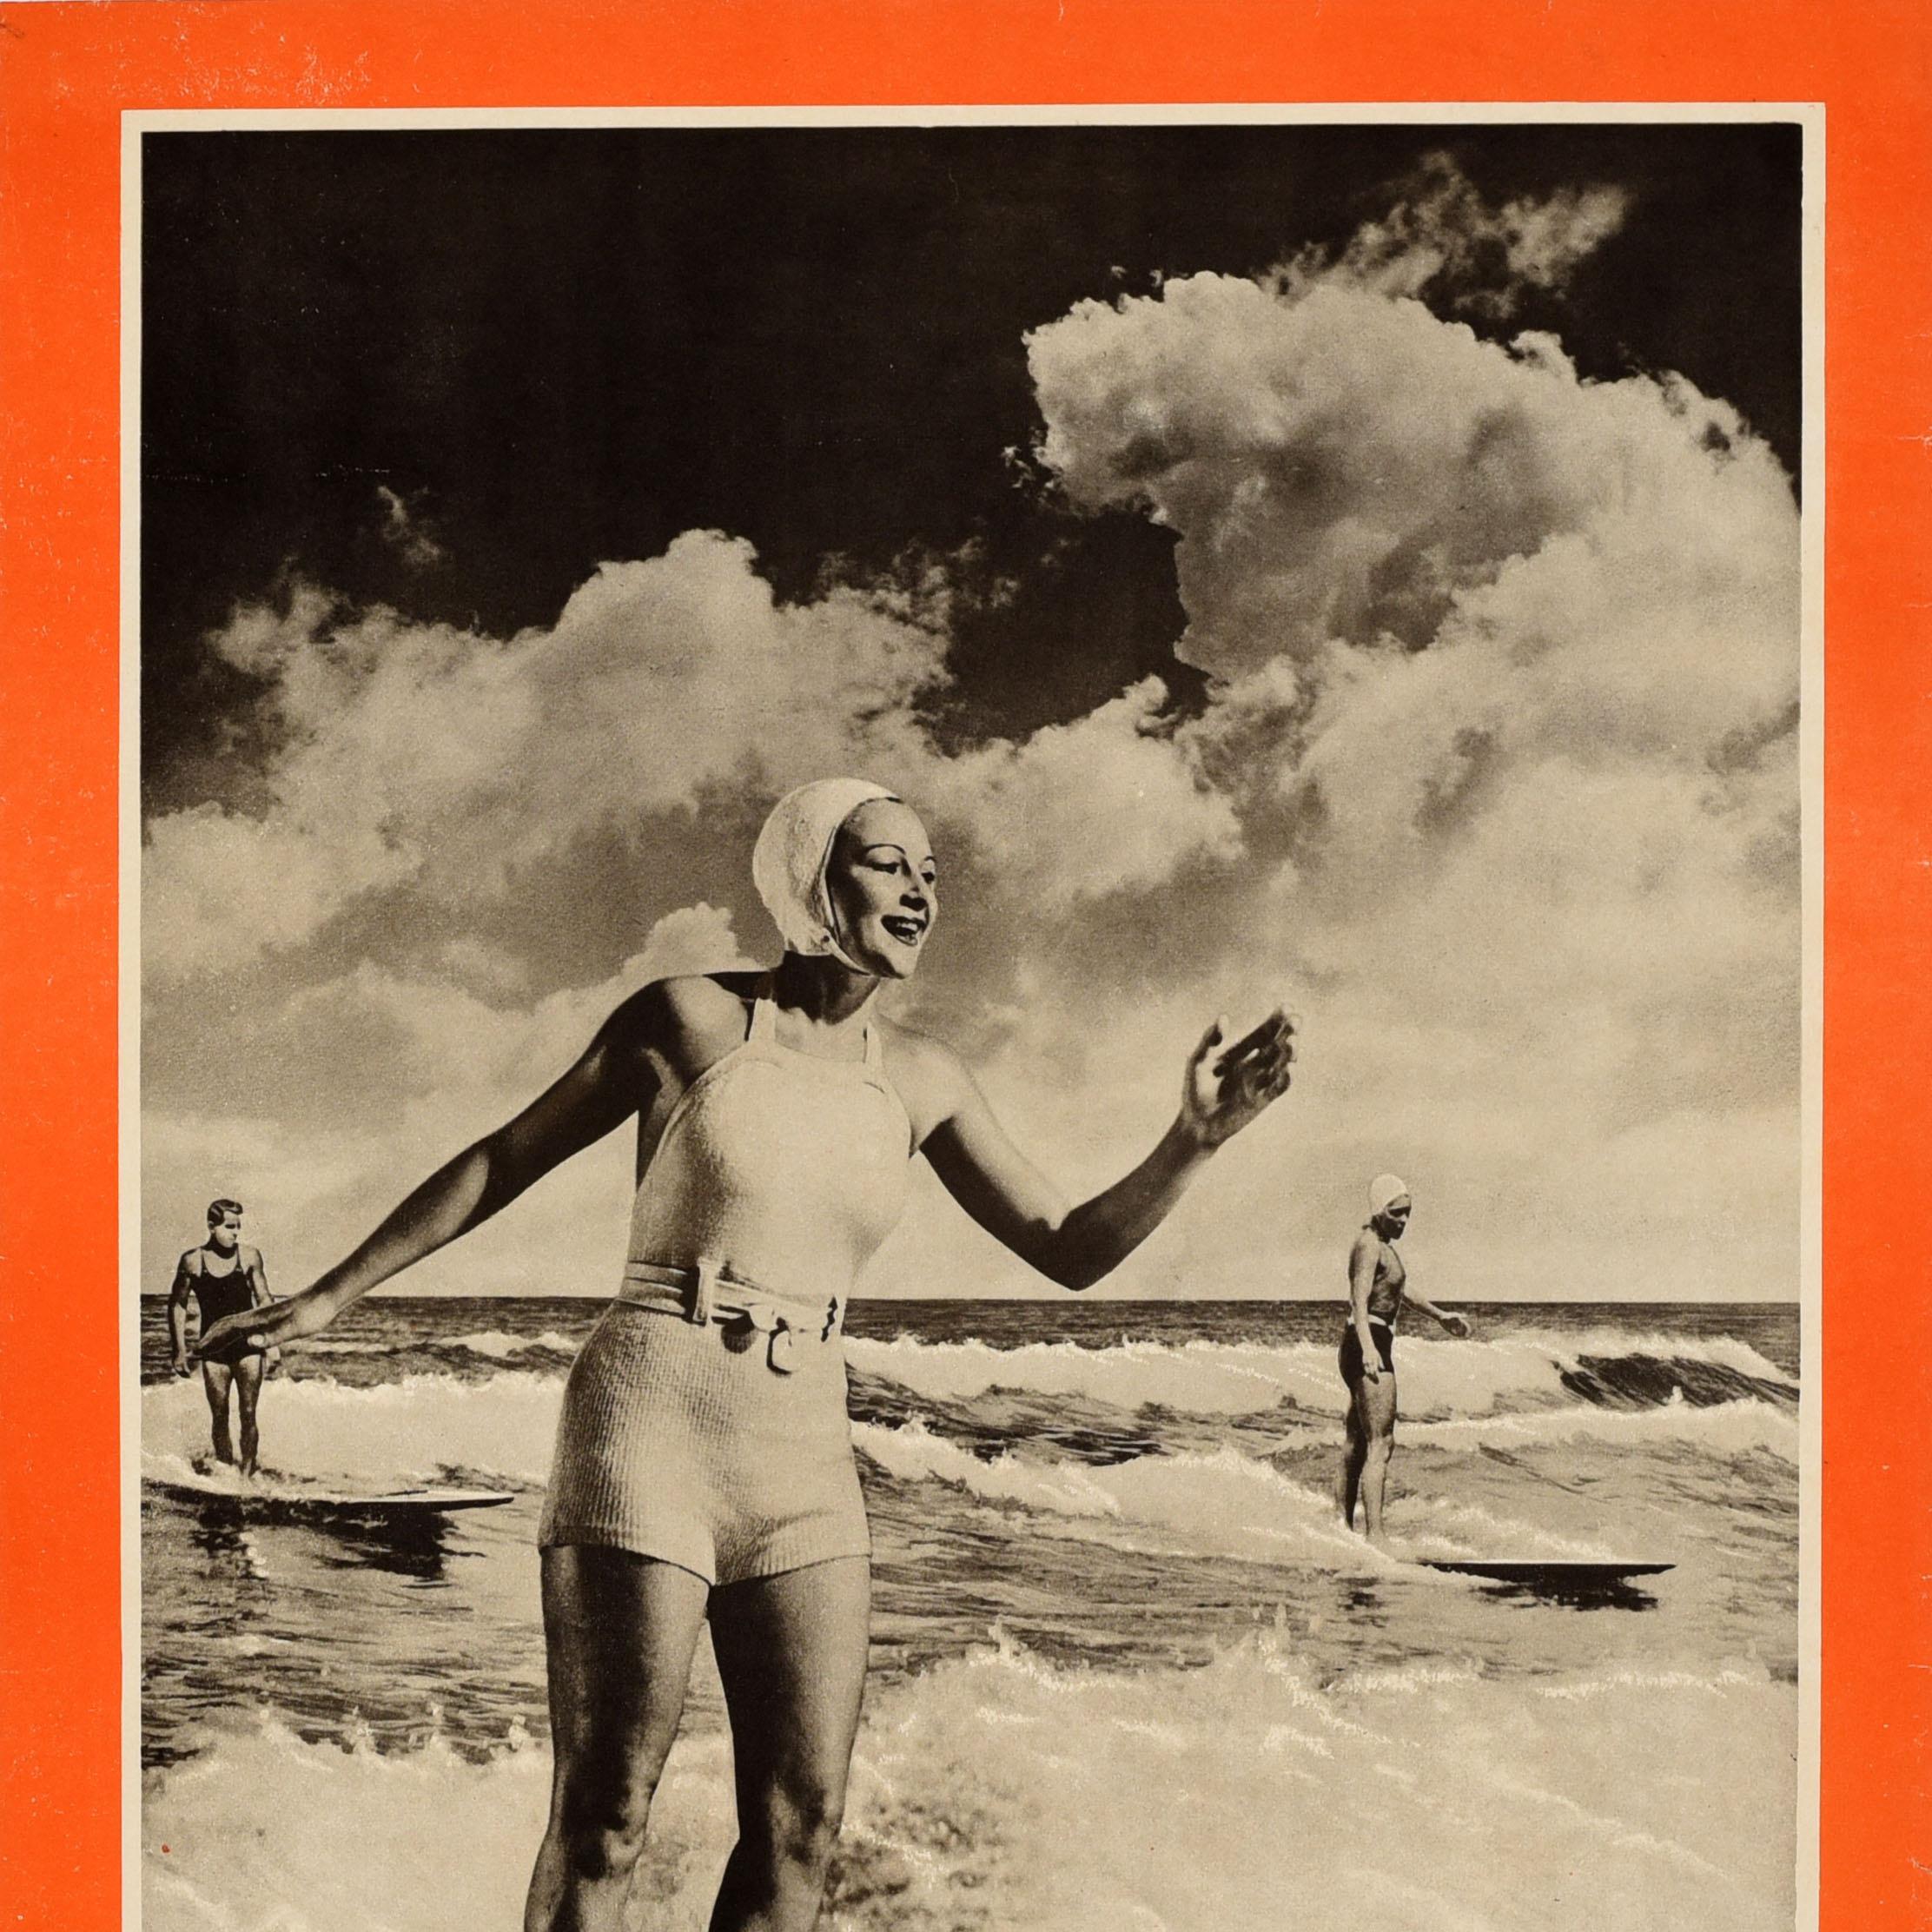 Australian Original Vintage Water Sport Travel Poster Surfing Australia Lady Surfer Design For Sale